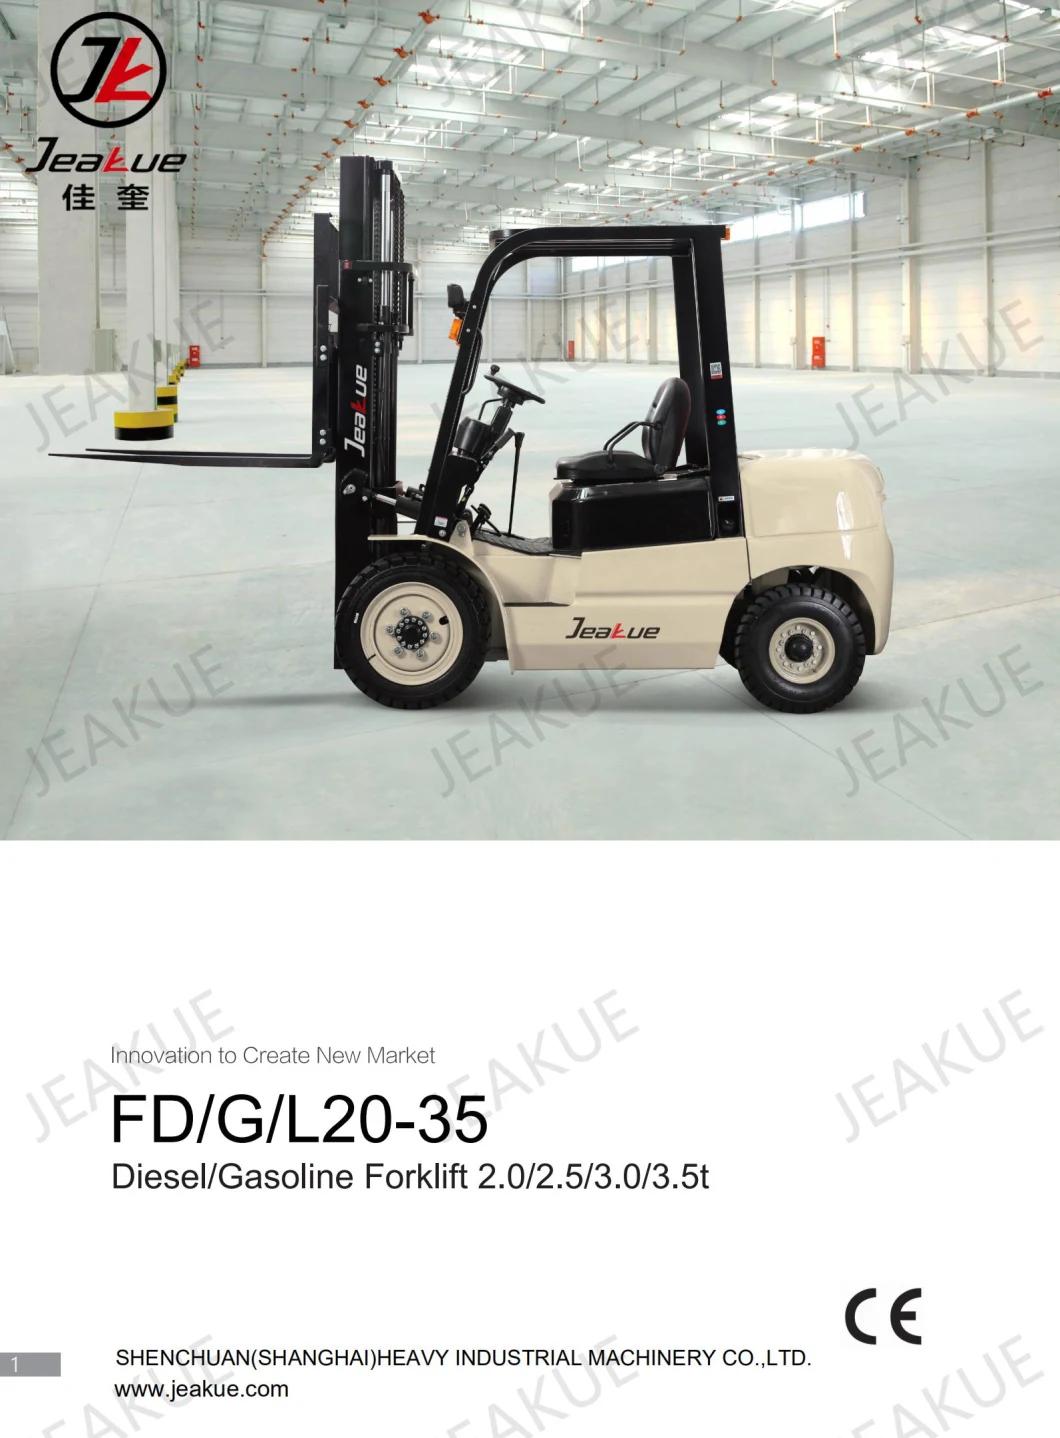 Diesel Forklift 2t/2.5t/3t/3.5t Range Formal Heavy Duty Forklift